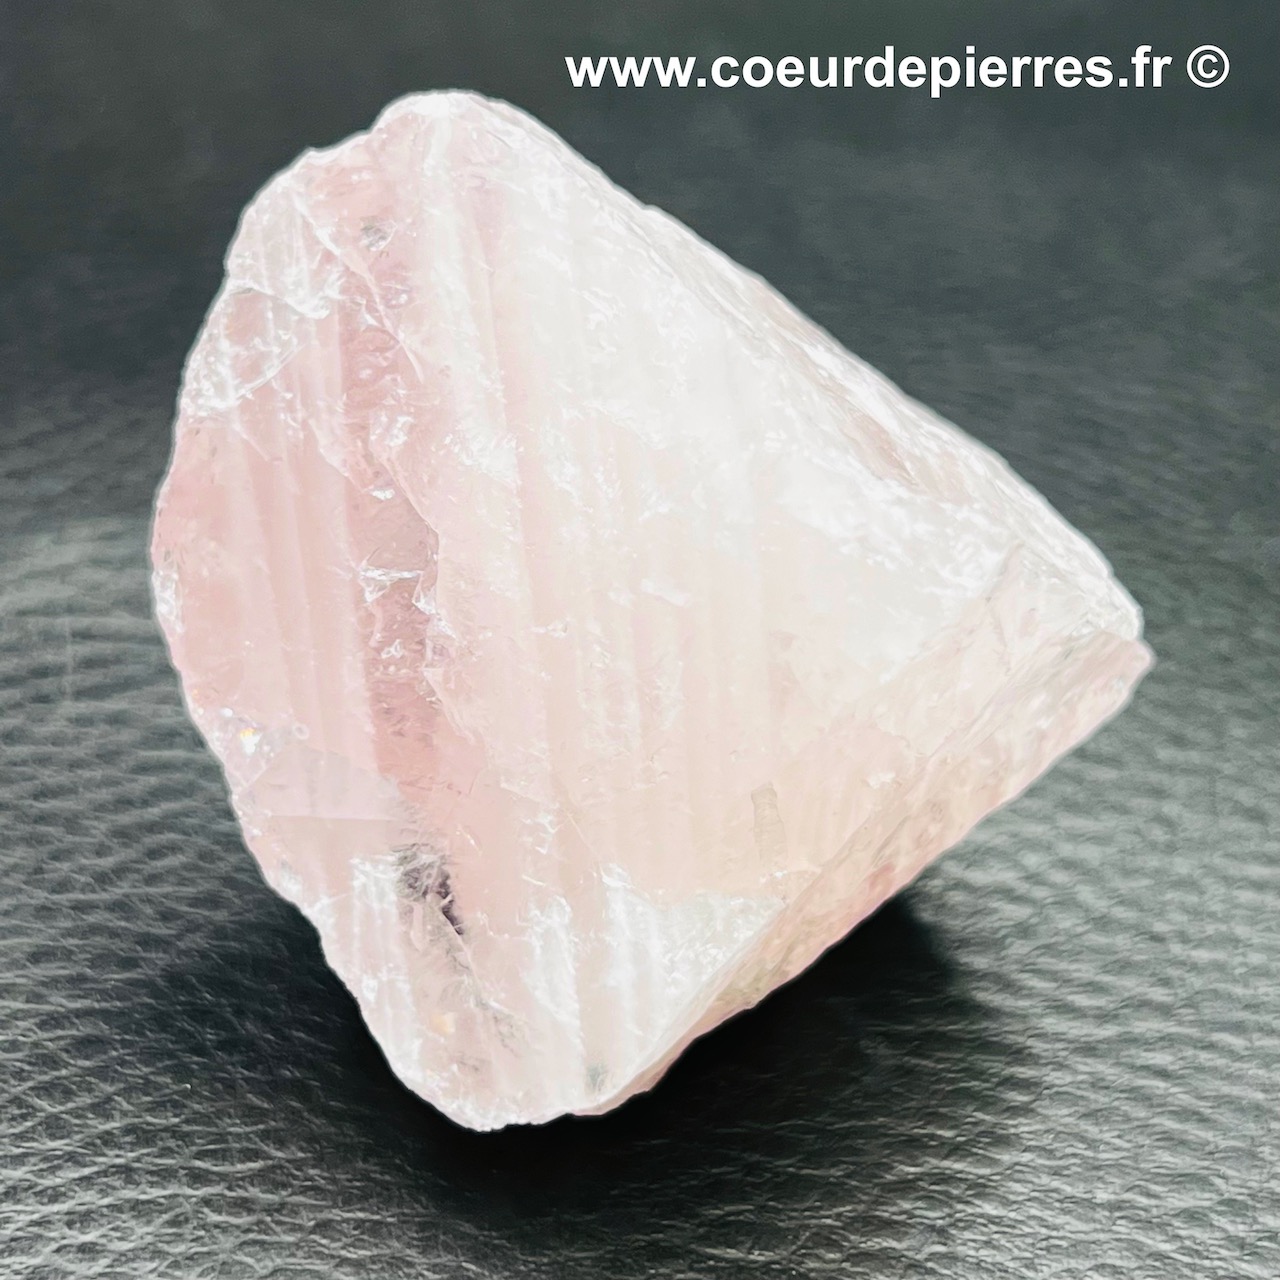 Bloc brut de quartz rose de Madagascar (réf prb2)